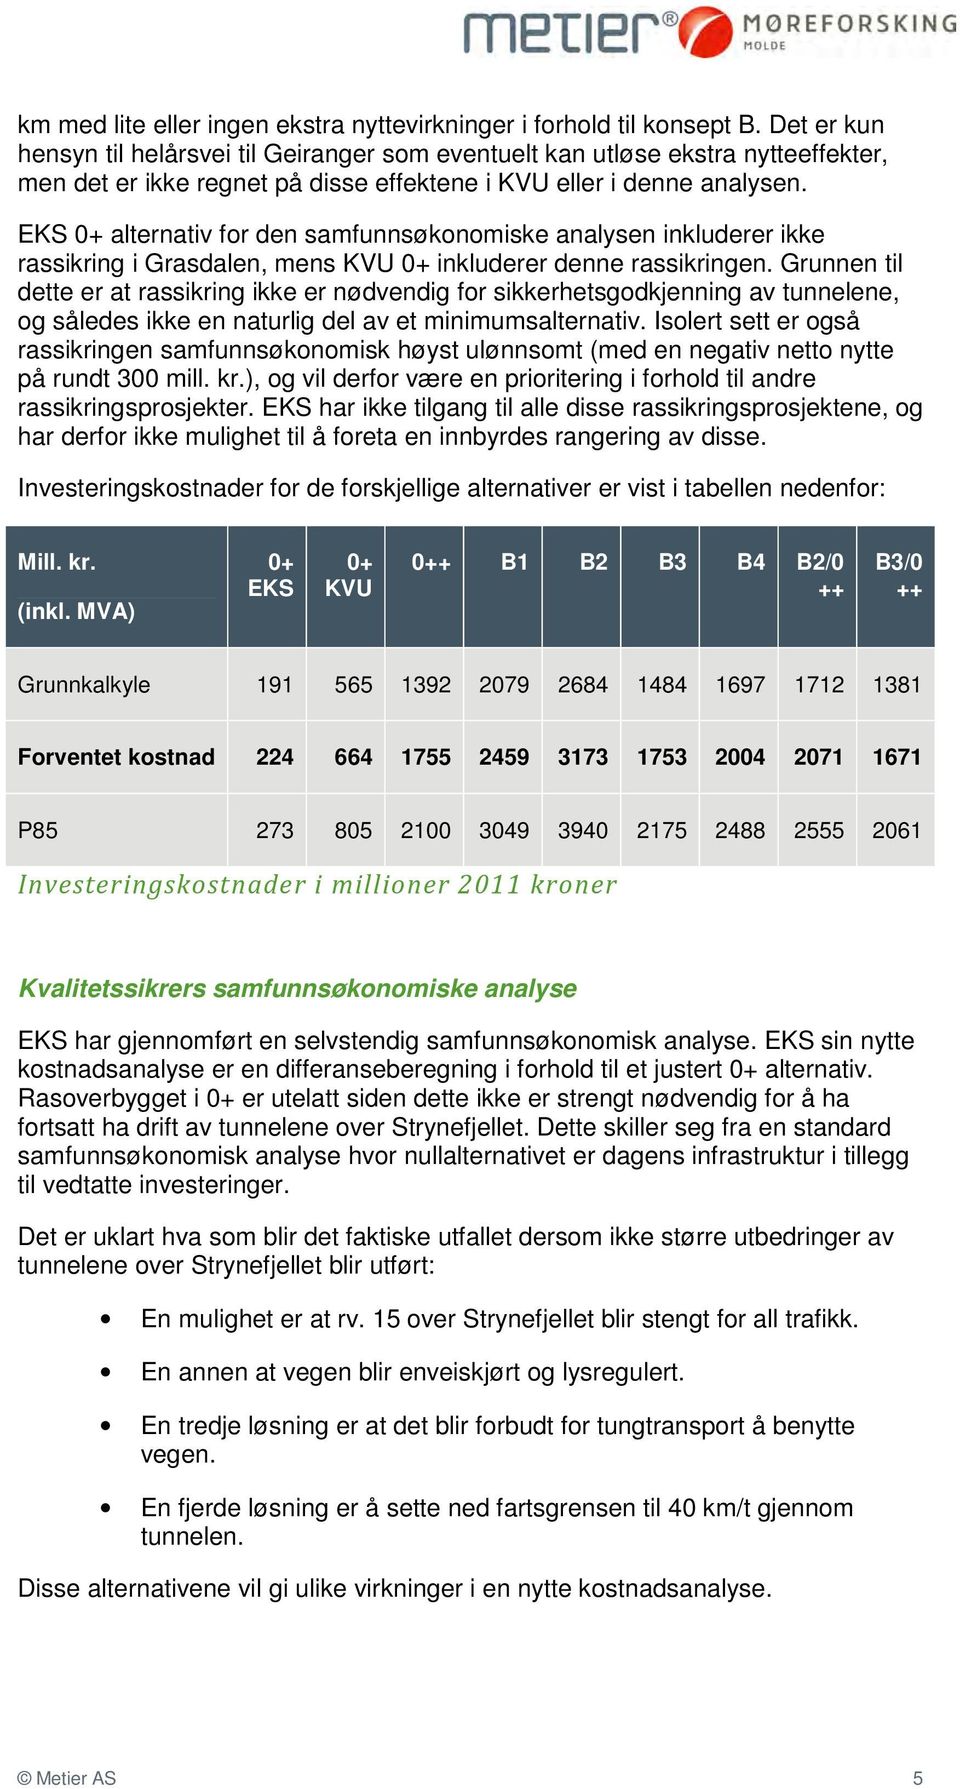 EKS 0+ alternativ for den samfunnsøkonomiske analysen inkluderer ikke rassikring i Grasdalen, mens KVU 0+ inkluderer denne rassikringen.